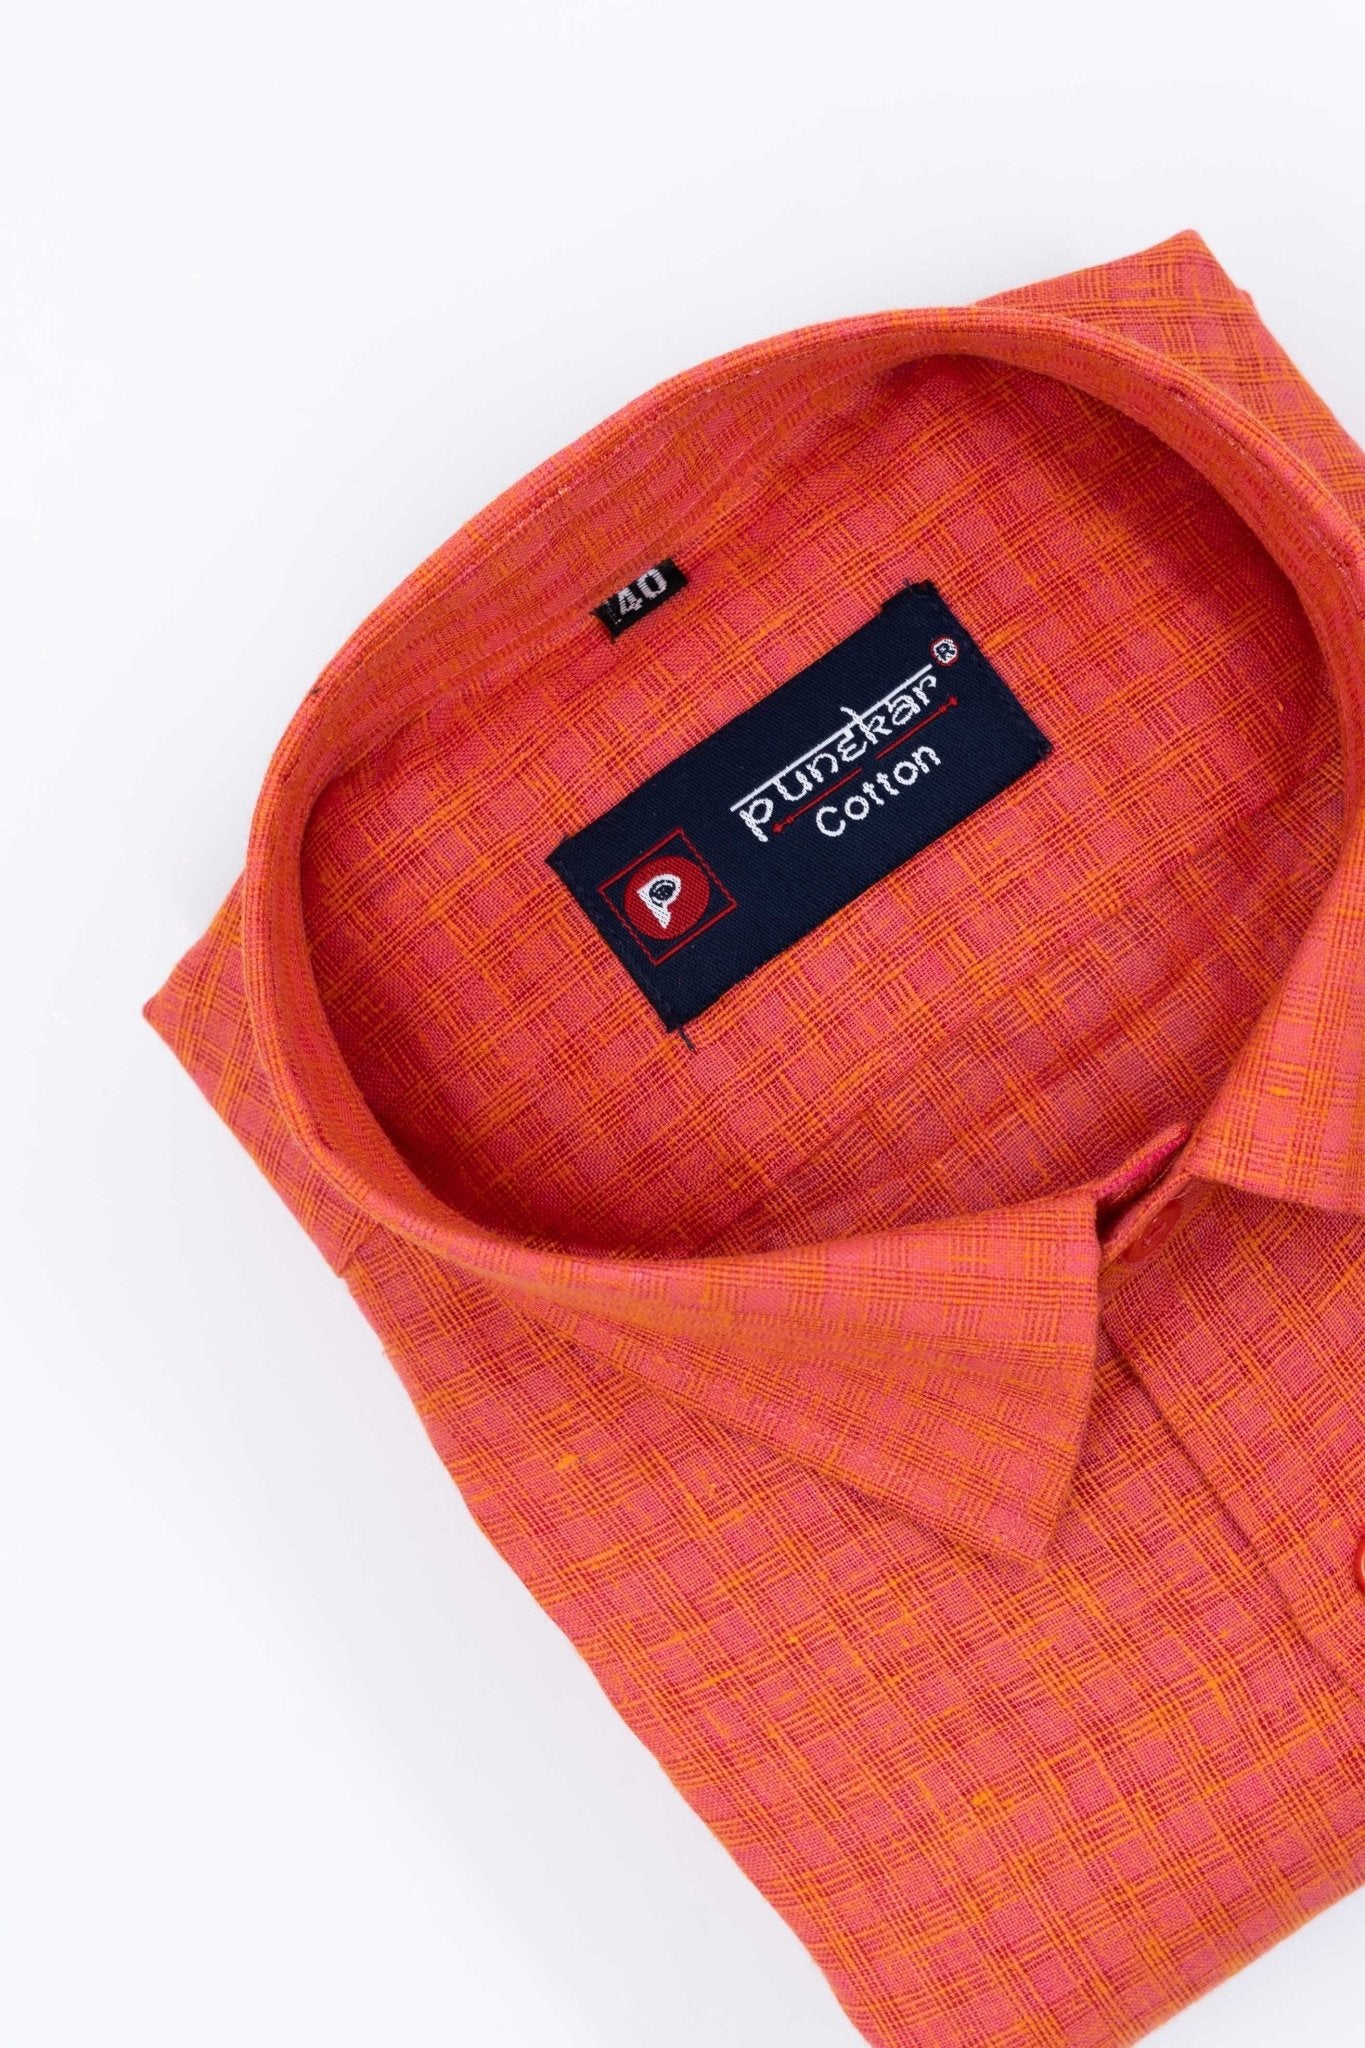 Orange Color Cotton Self Woven Checks Handmade Shirts For Men's - Punekar Cotton